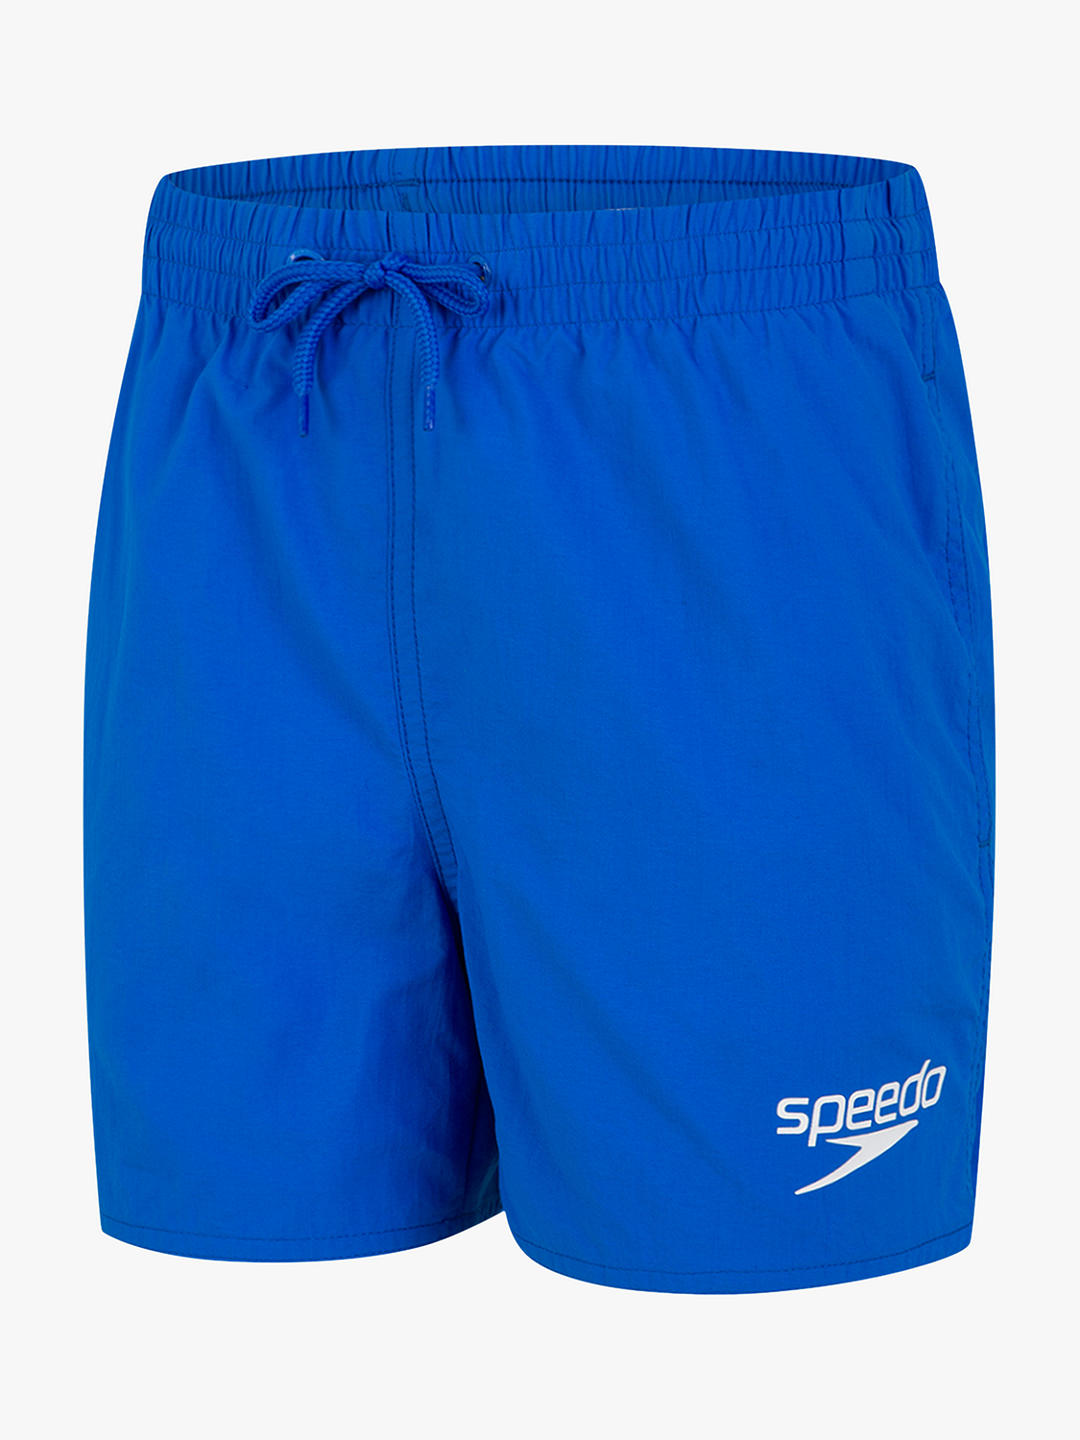 Speedo Boys' Essentials 13" Swim Shorts, Blue